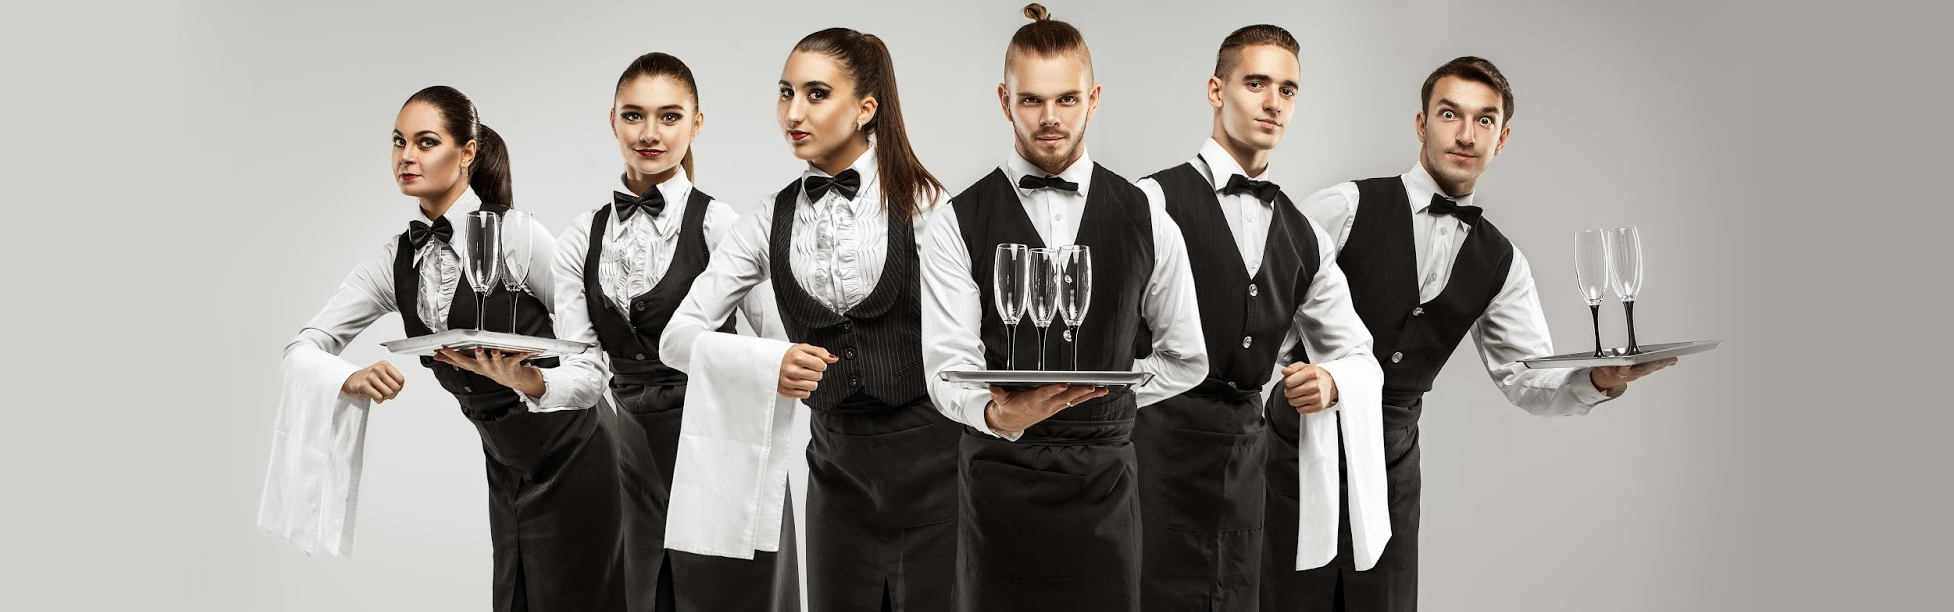 Hospitality uniforms | Hospitality Uniform Suppliers | Hotel Staff Uniform